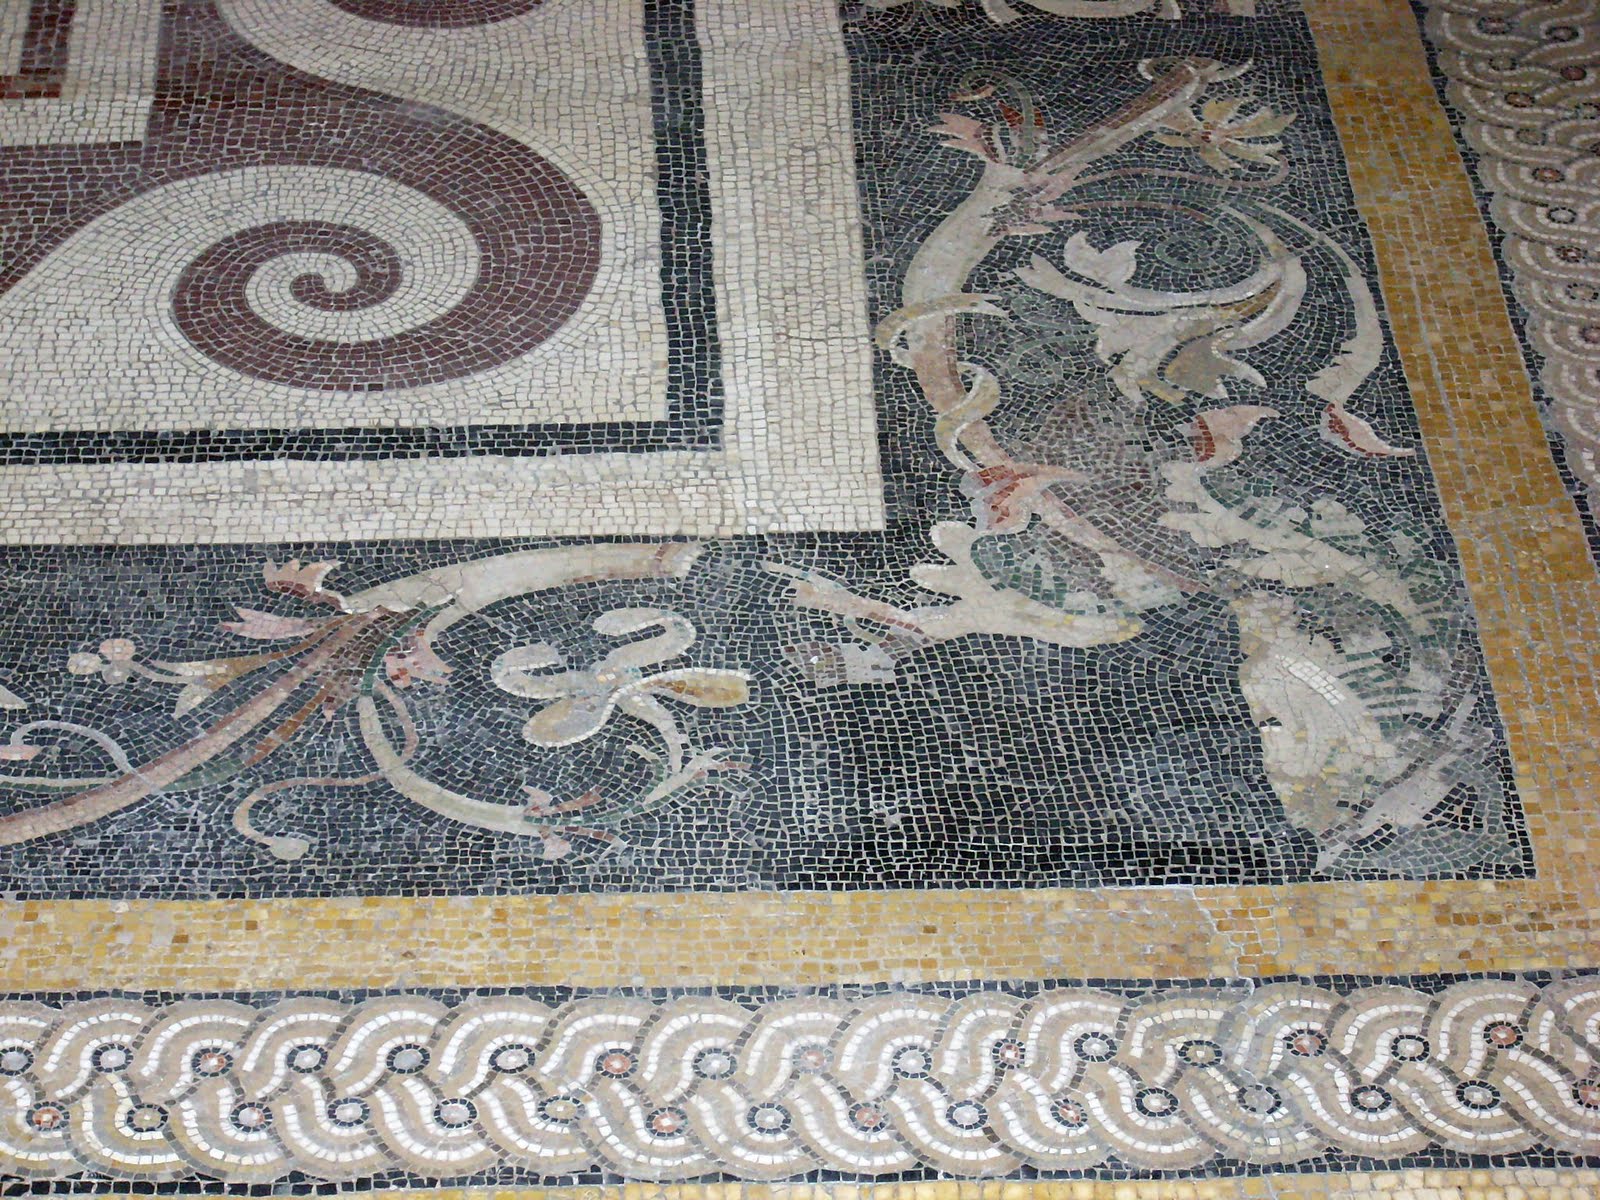 Berlin 2011 01 19 02 18 Mozaik I Pergamonmuseum